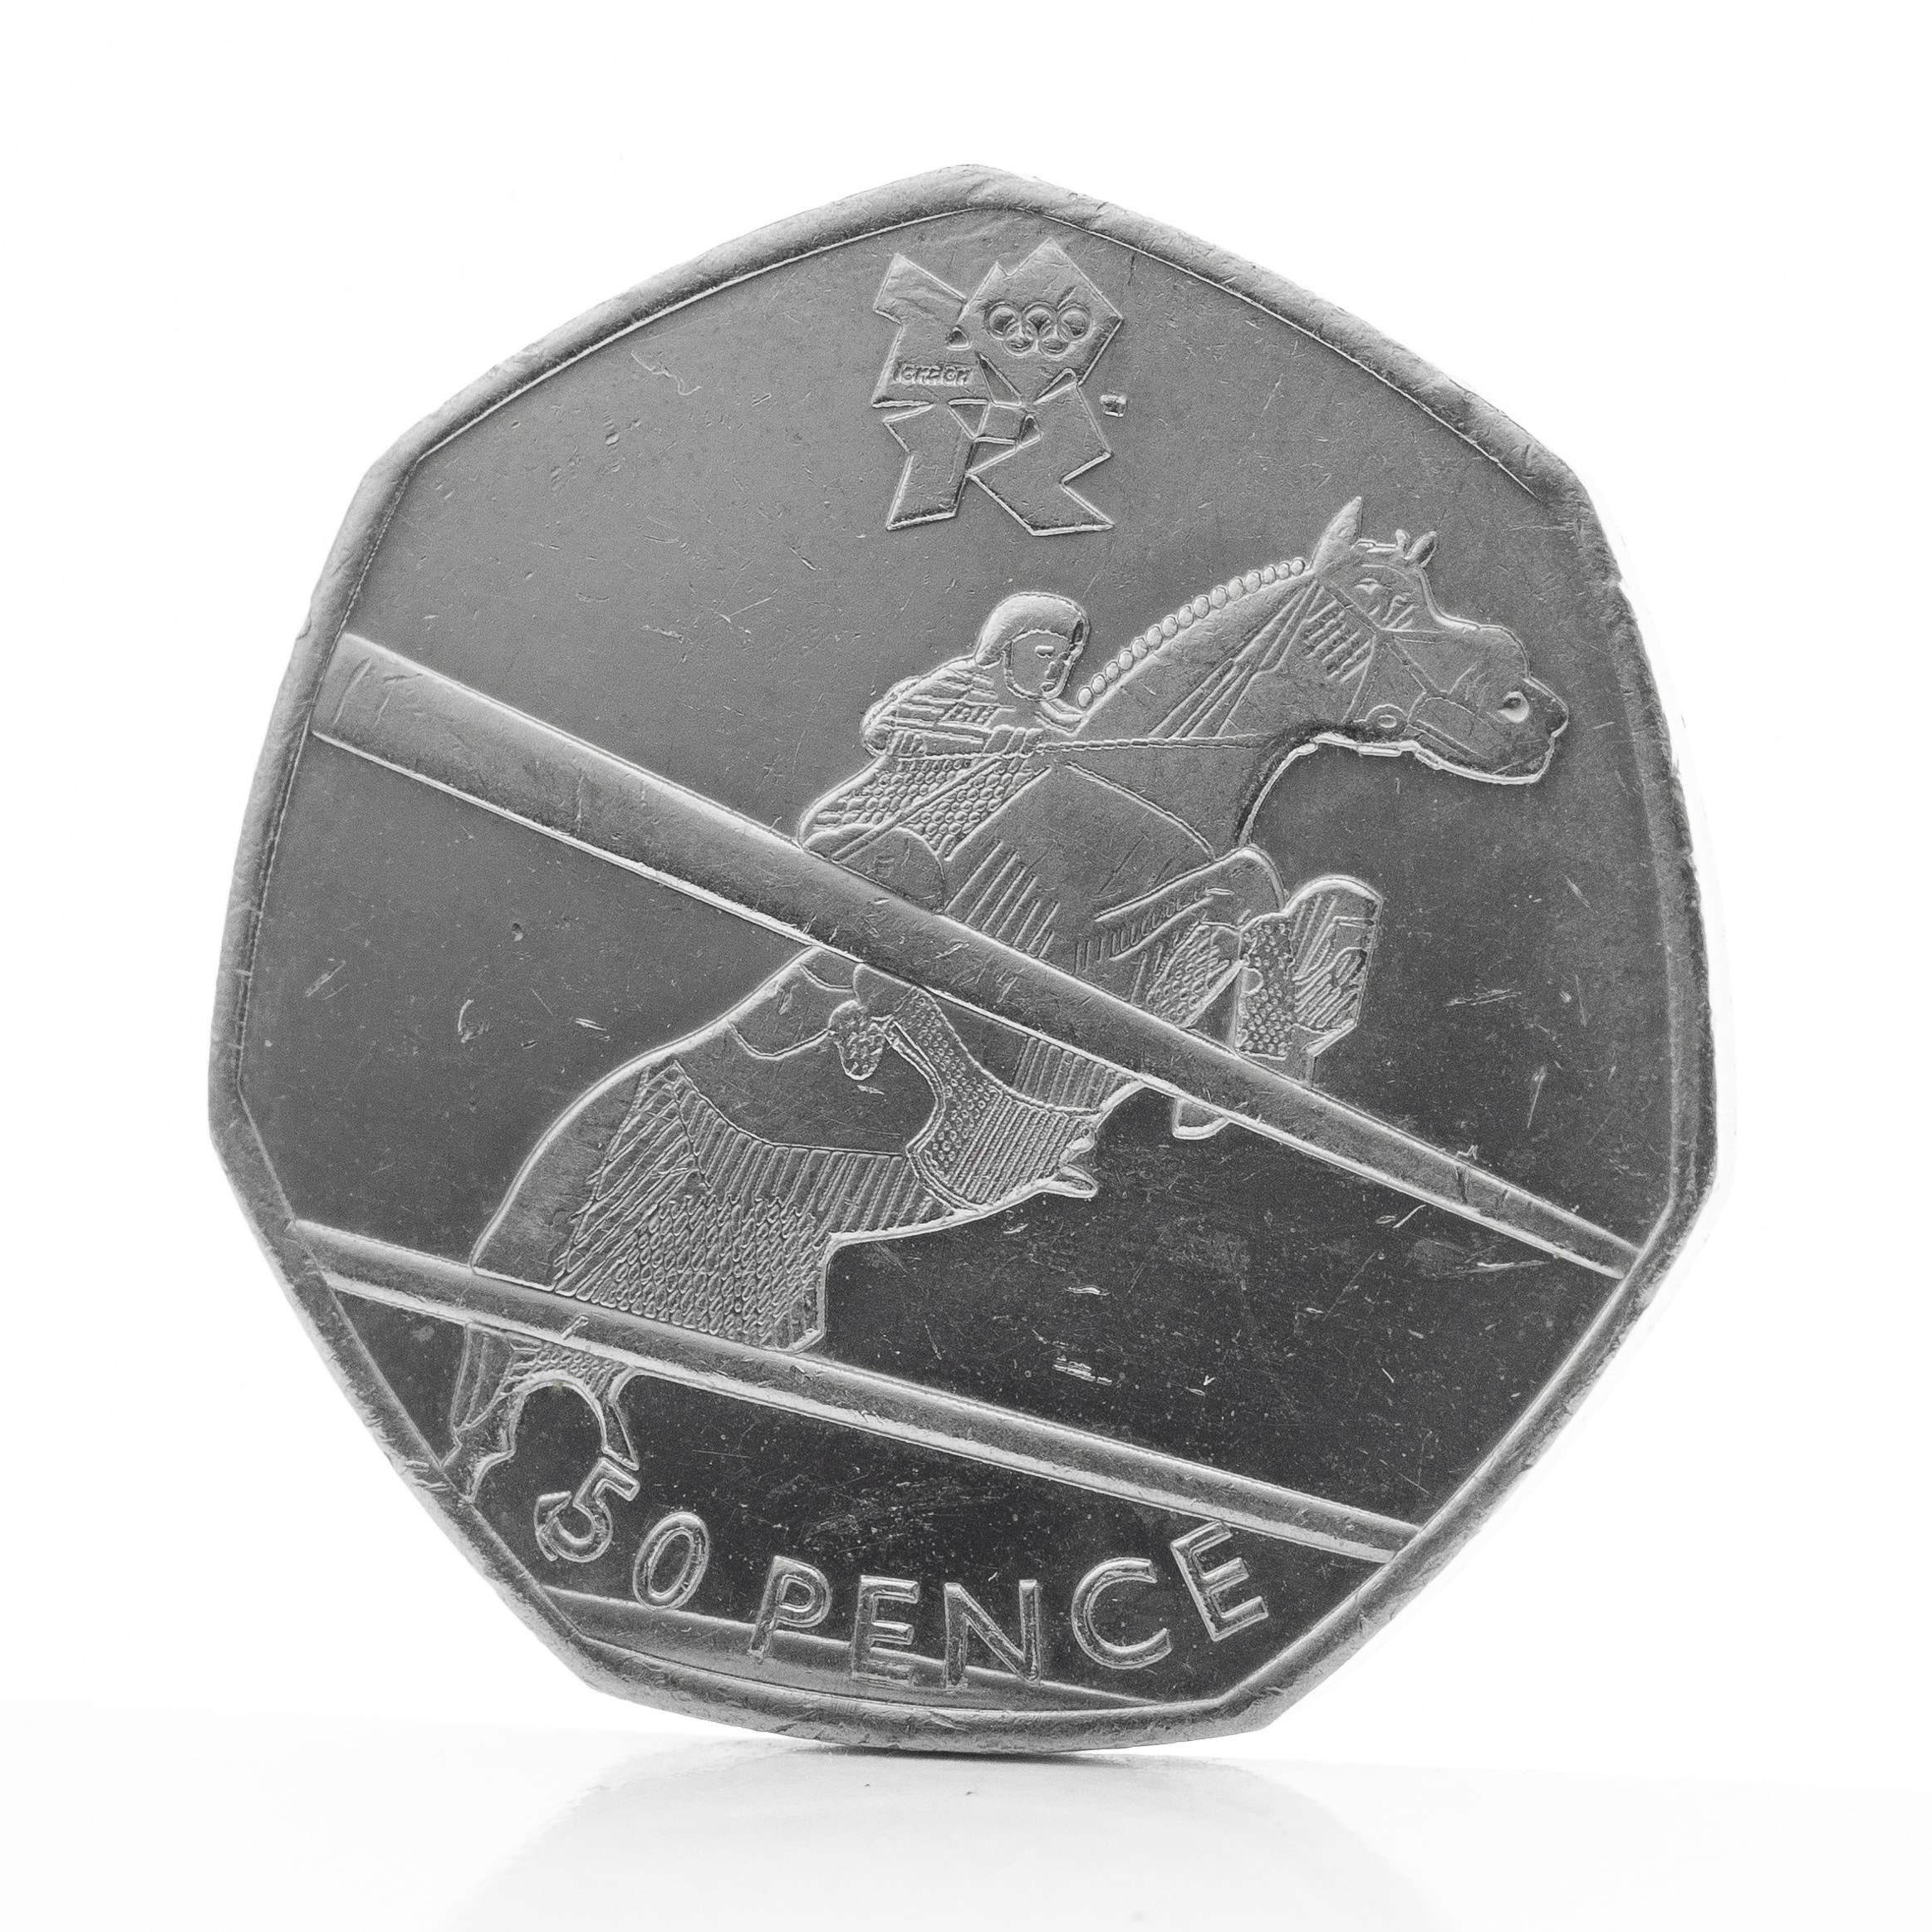 equestrian 50p coin design